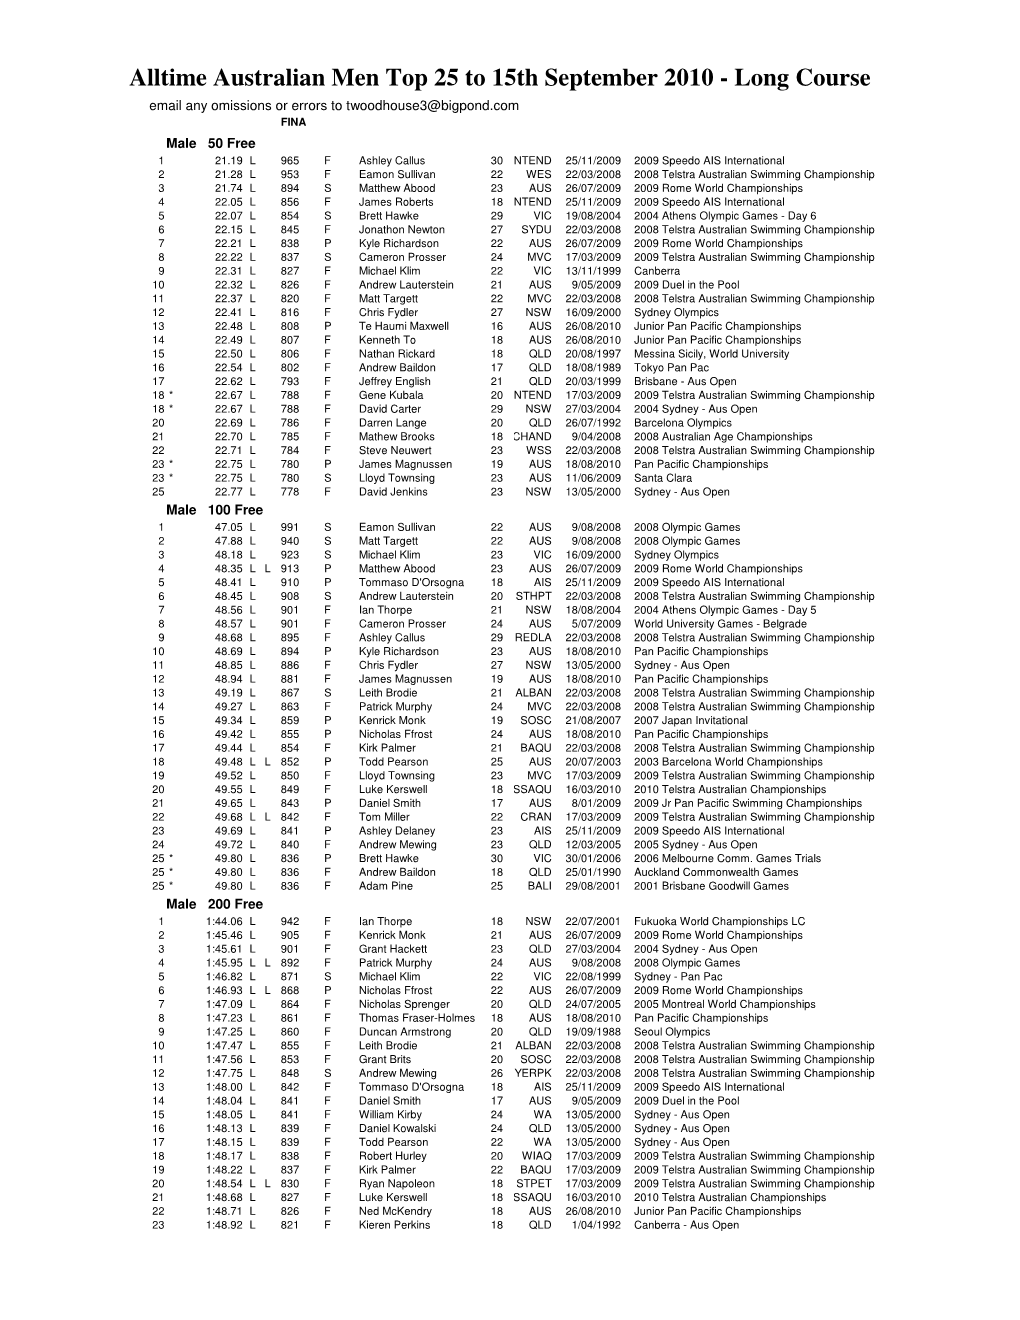 Alltime Men Top 25 Lc, to 15 Sep 2010